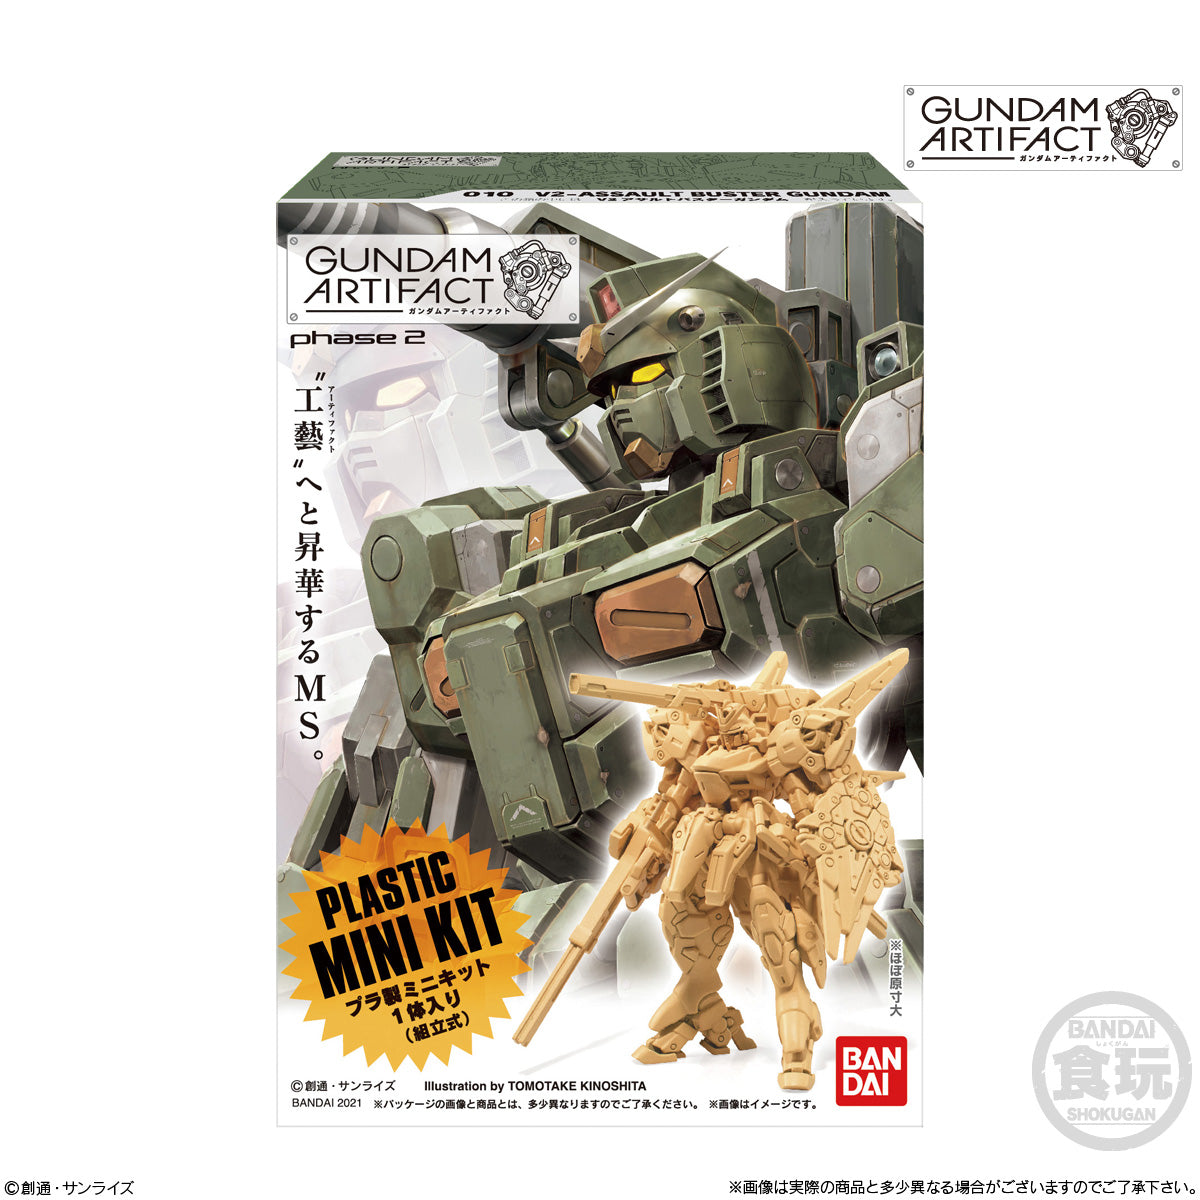 Limited Shokugan Gundam Artifact Vol.2 [Complete set]